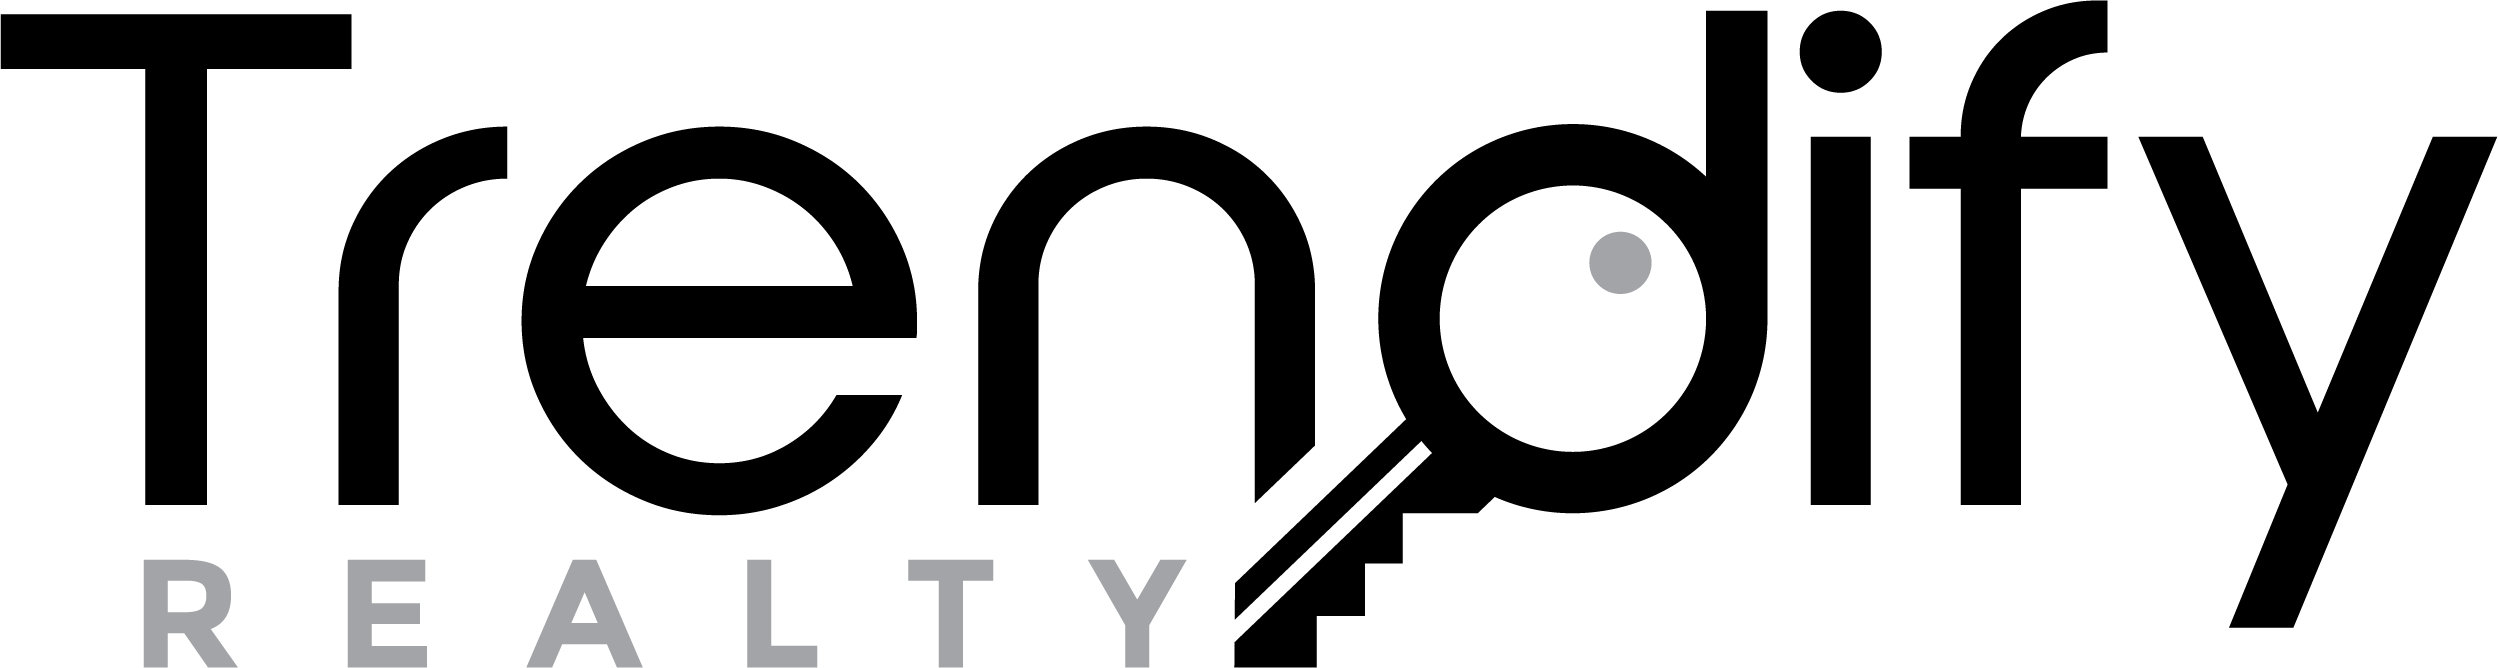 Trendify Realty Black Logo.png